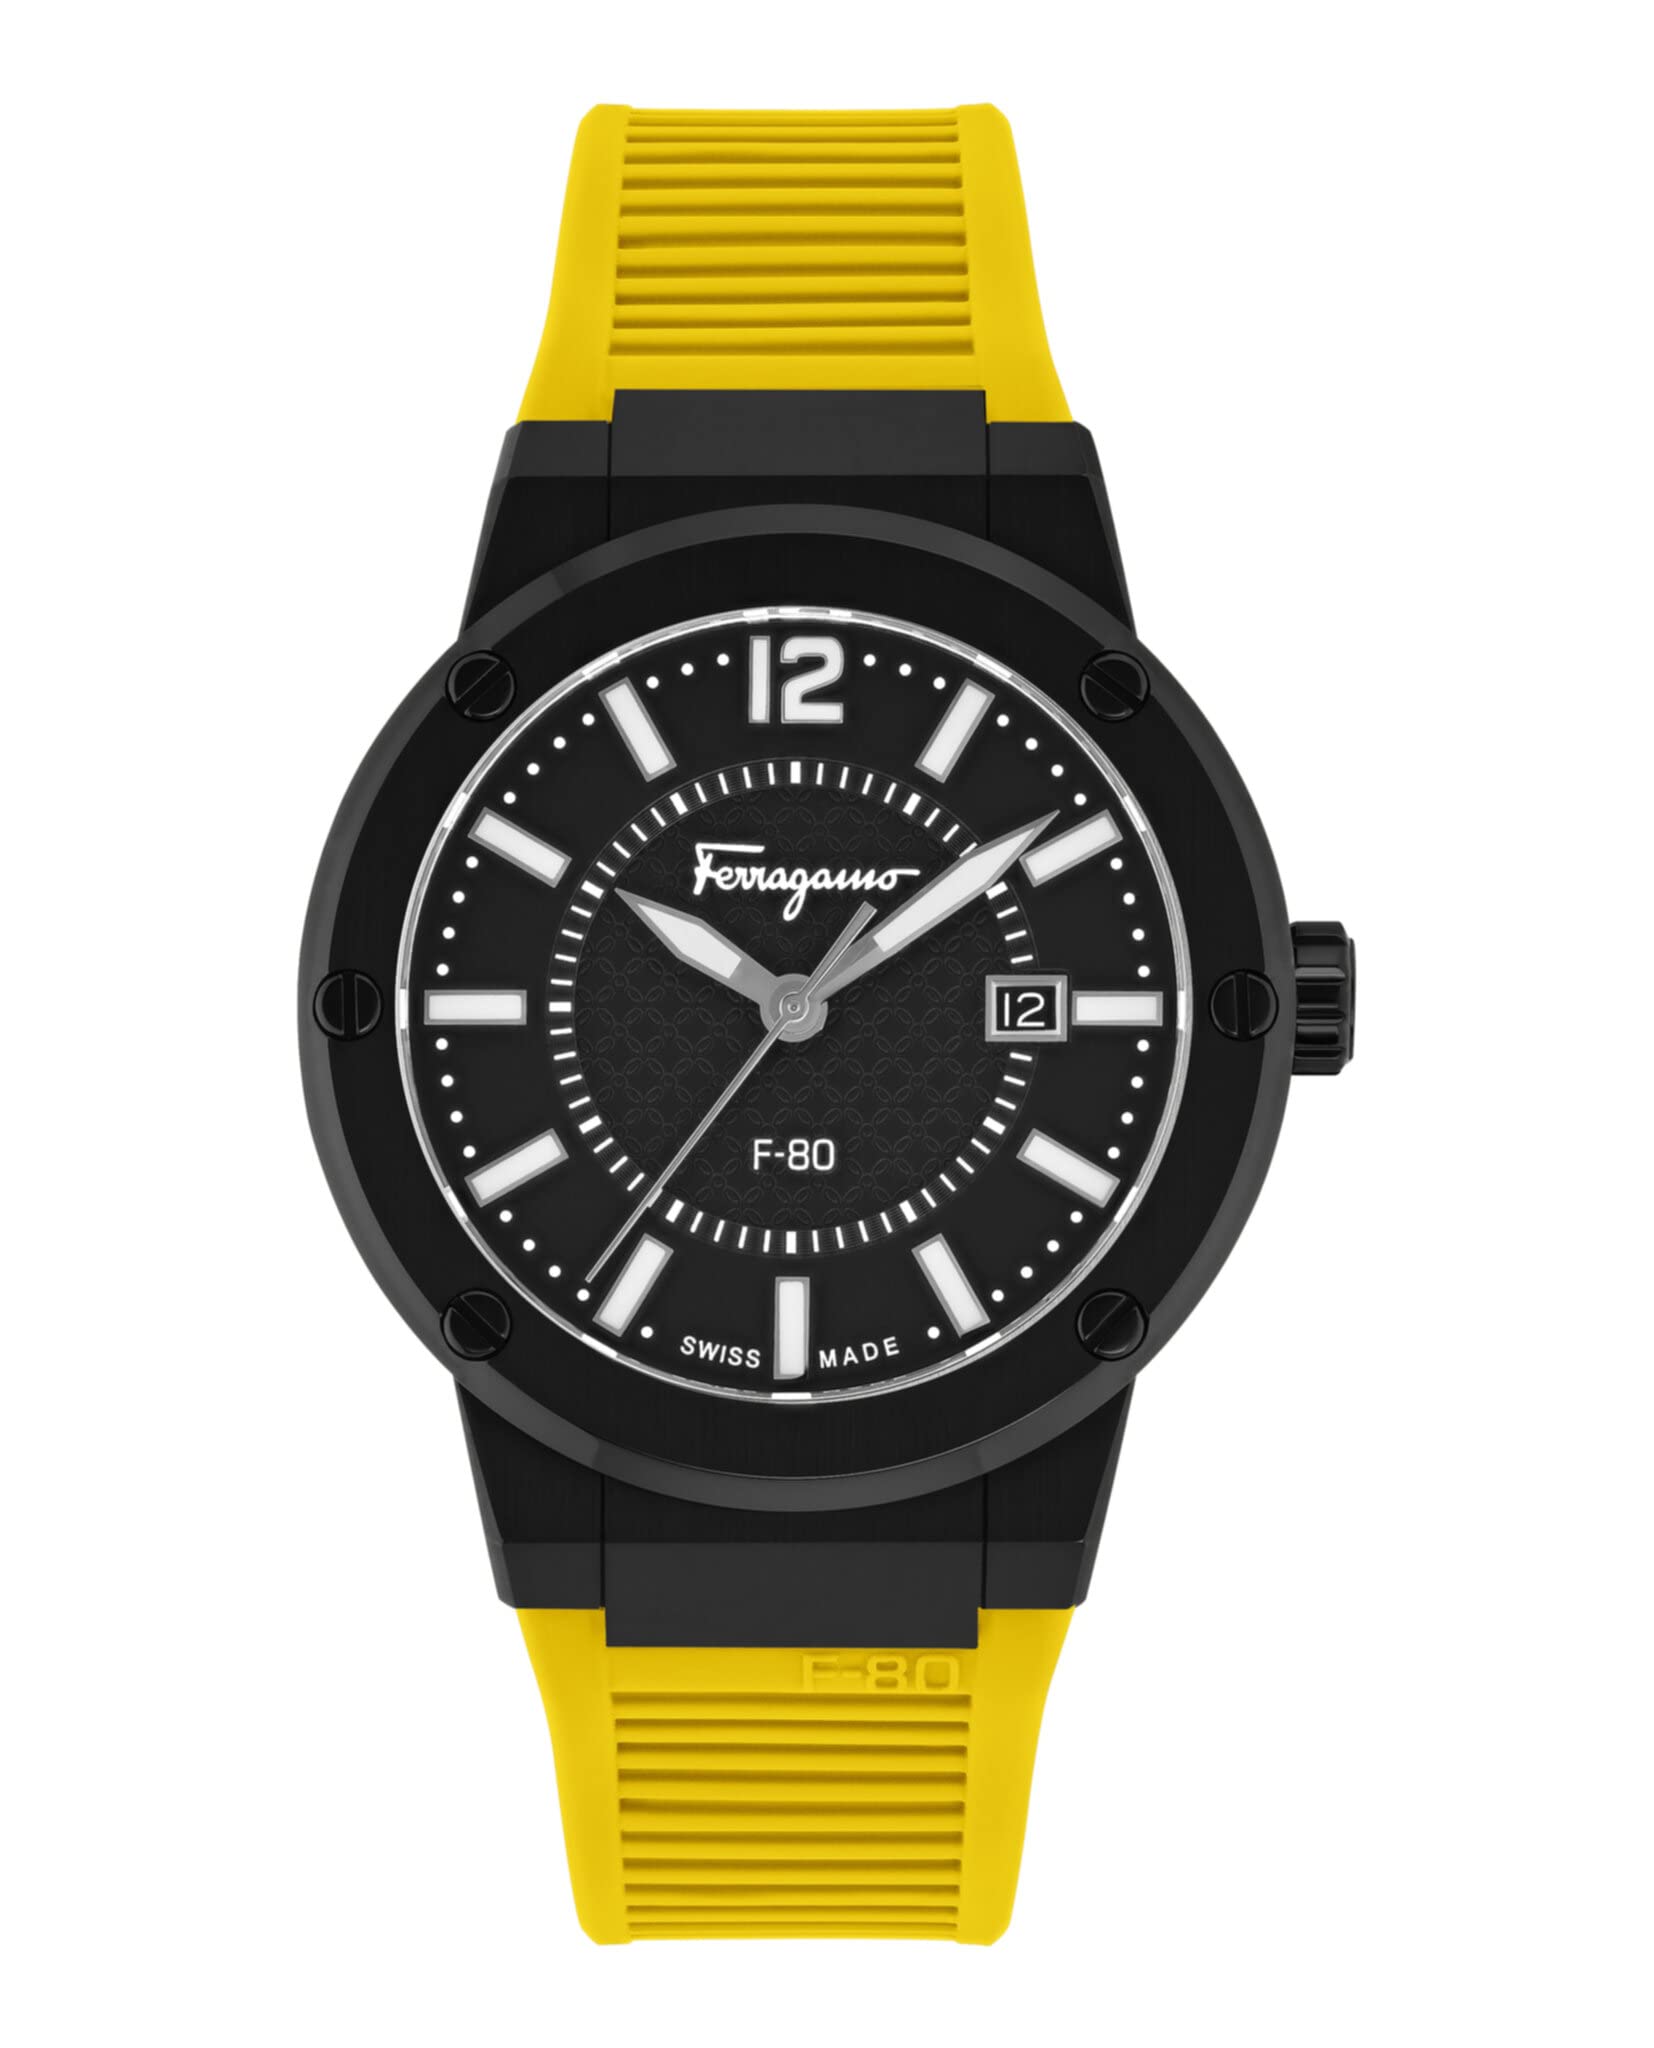 Ferragamo Mens Swiss Made Watch F-80 Collection